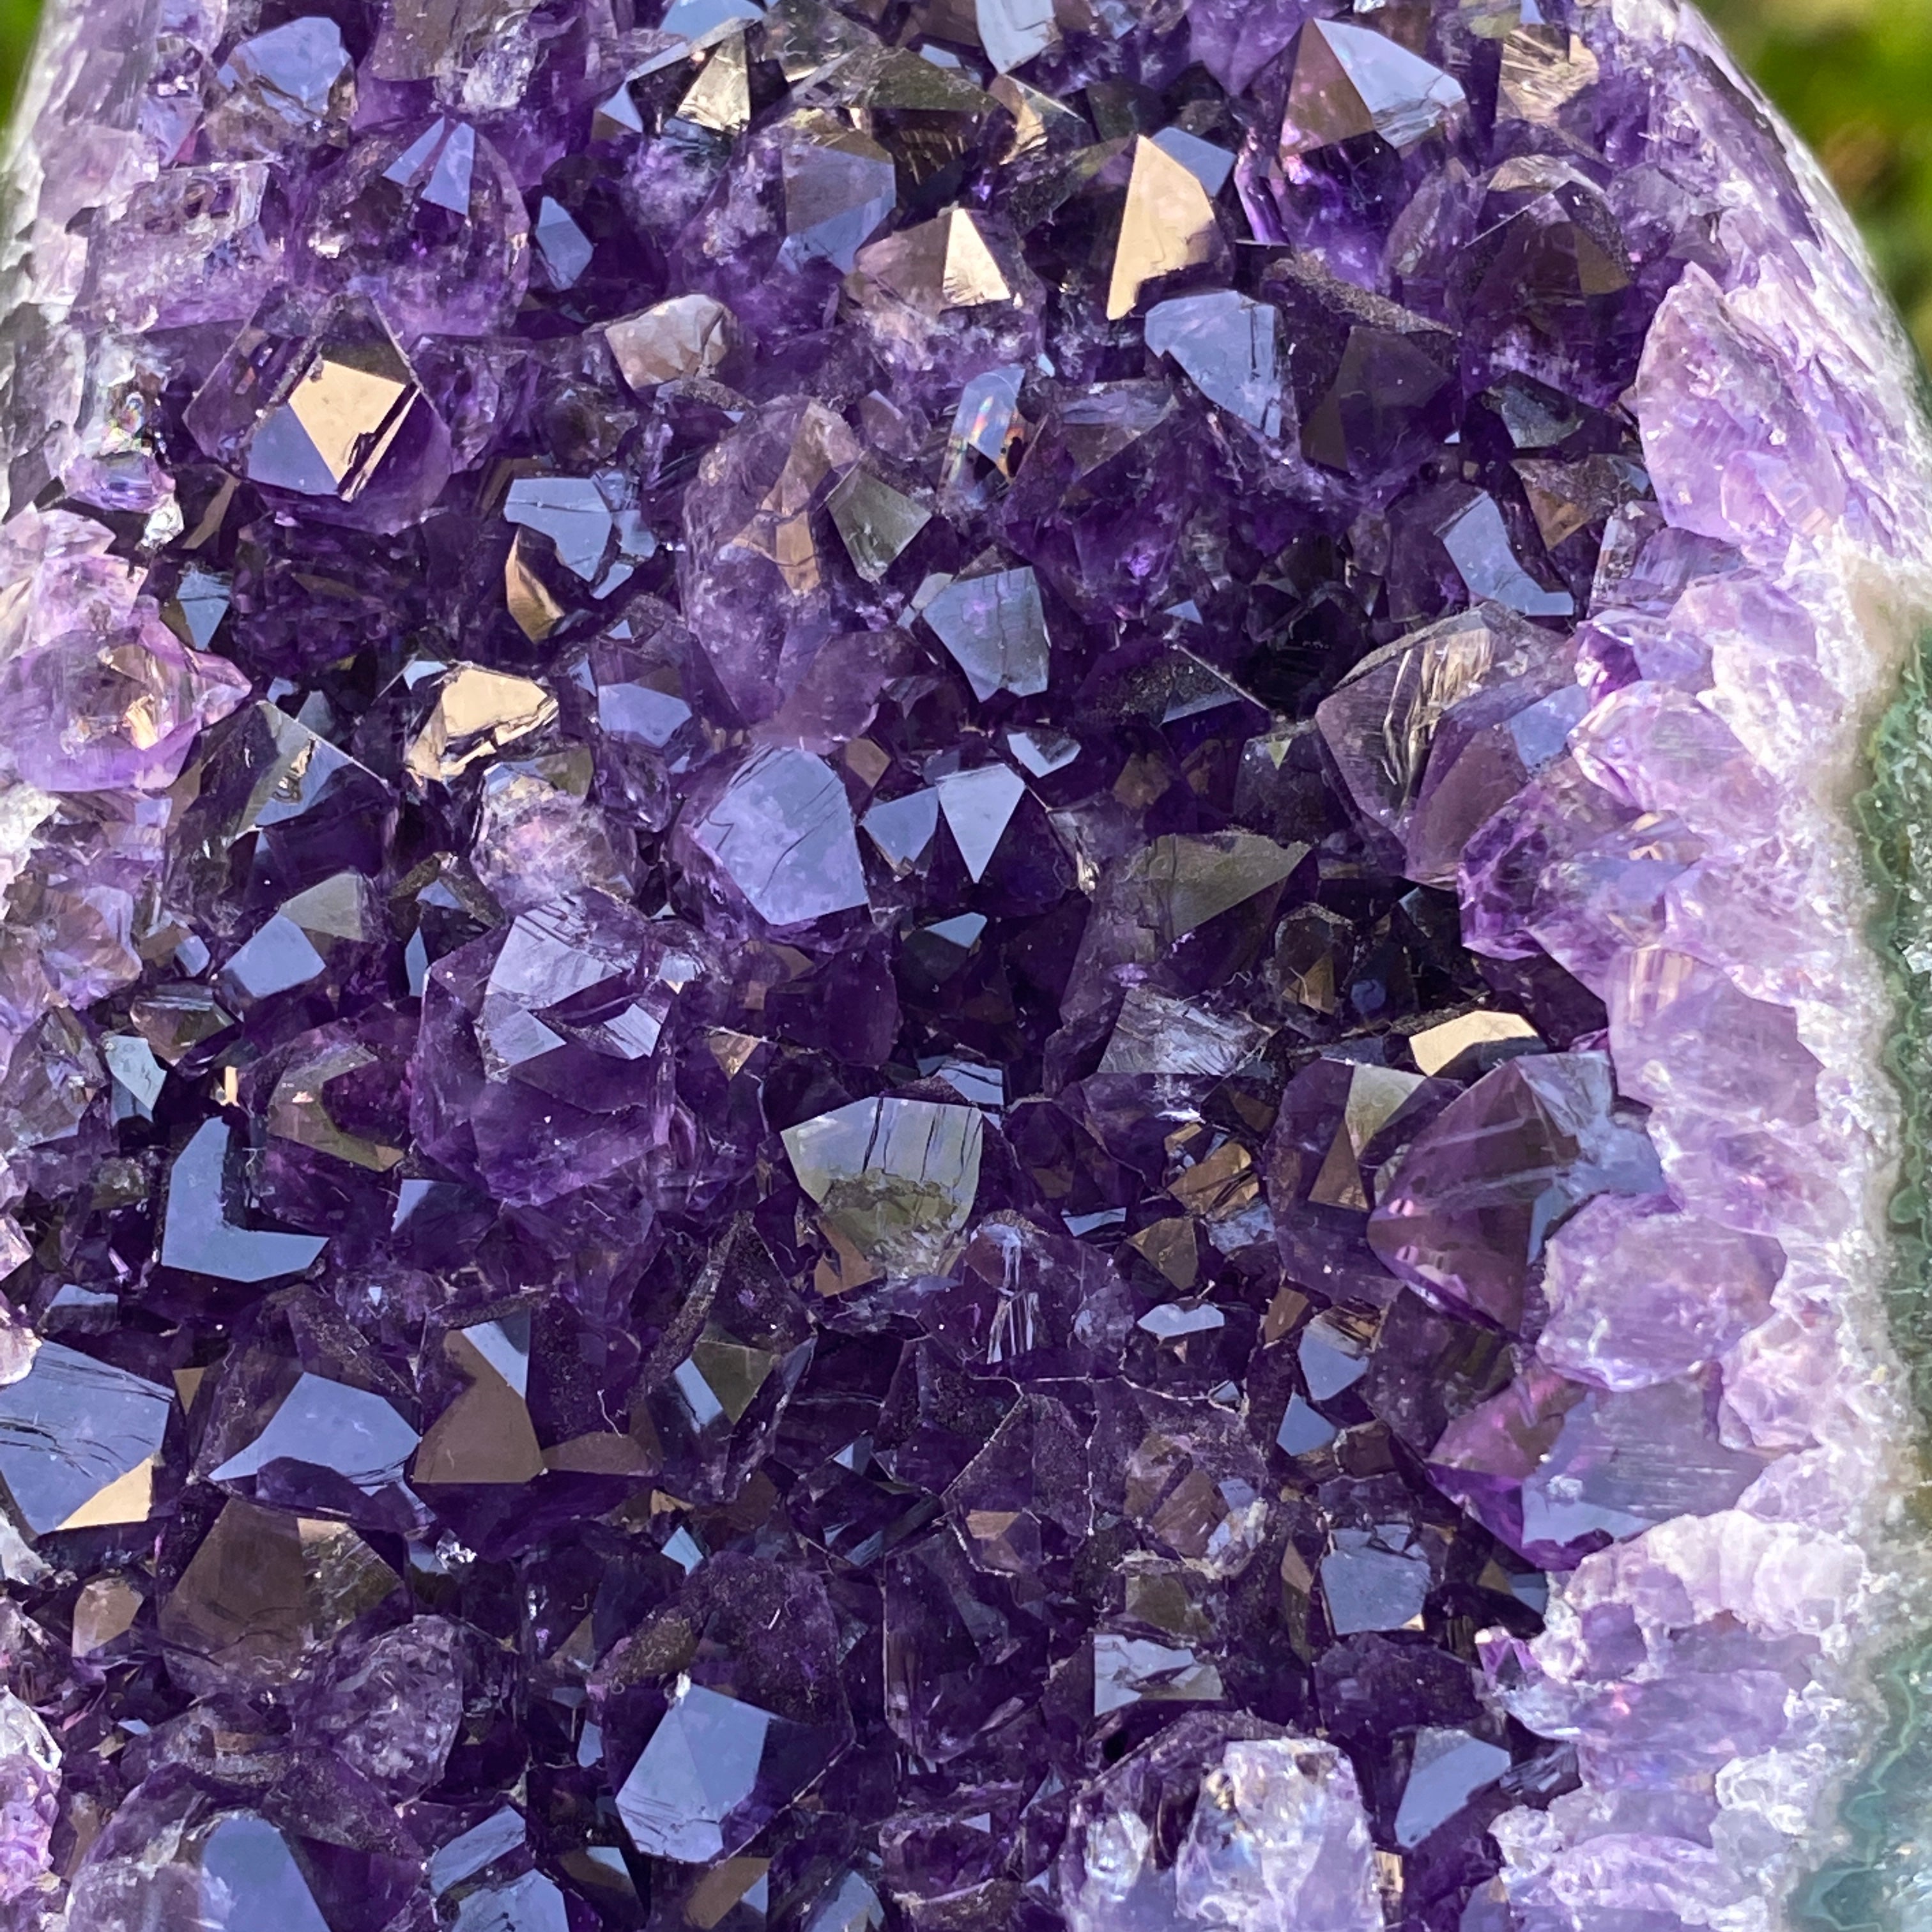 914g 10x9x9cm Grade A+ Big Smooth Crystal Purple Amethyst Geode from Uruguay